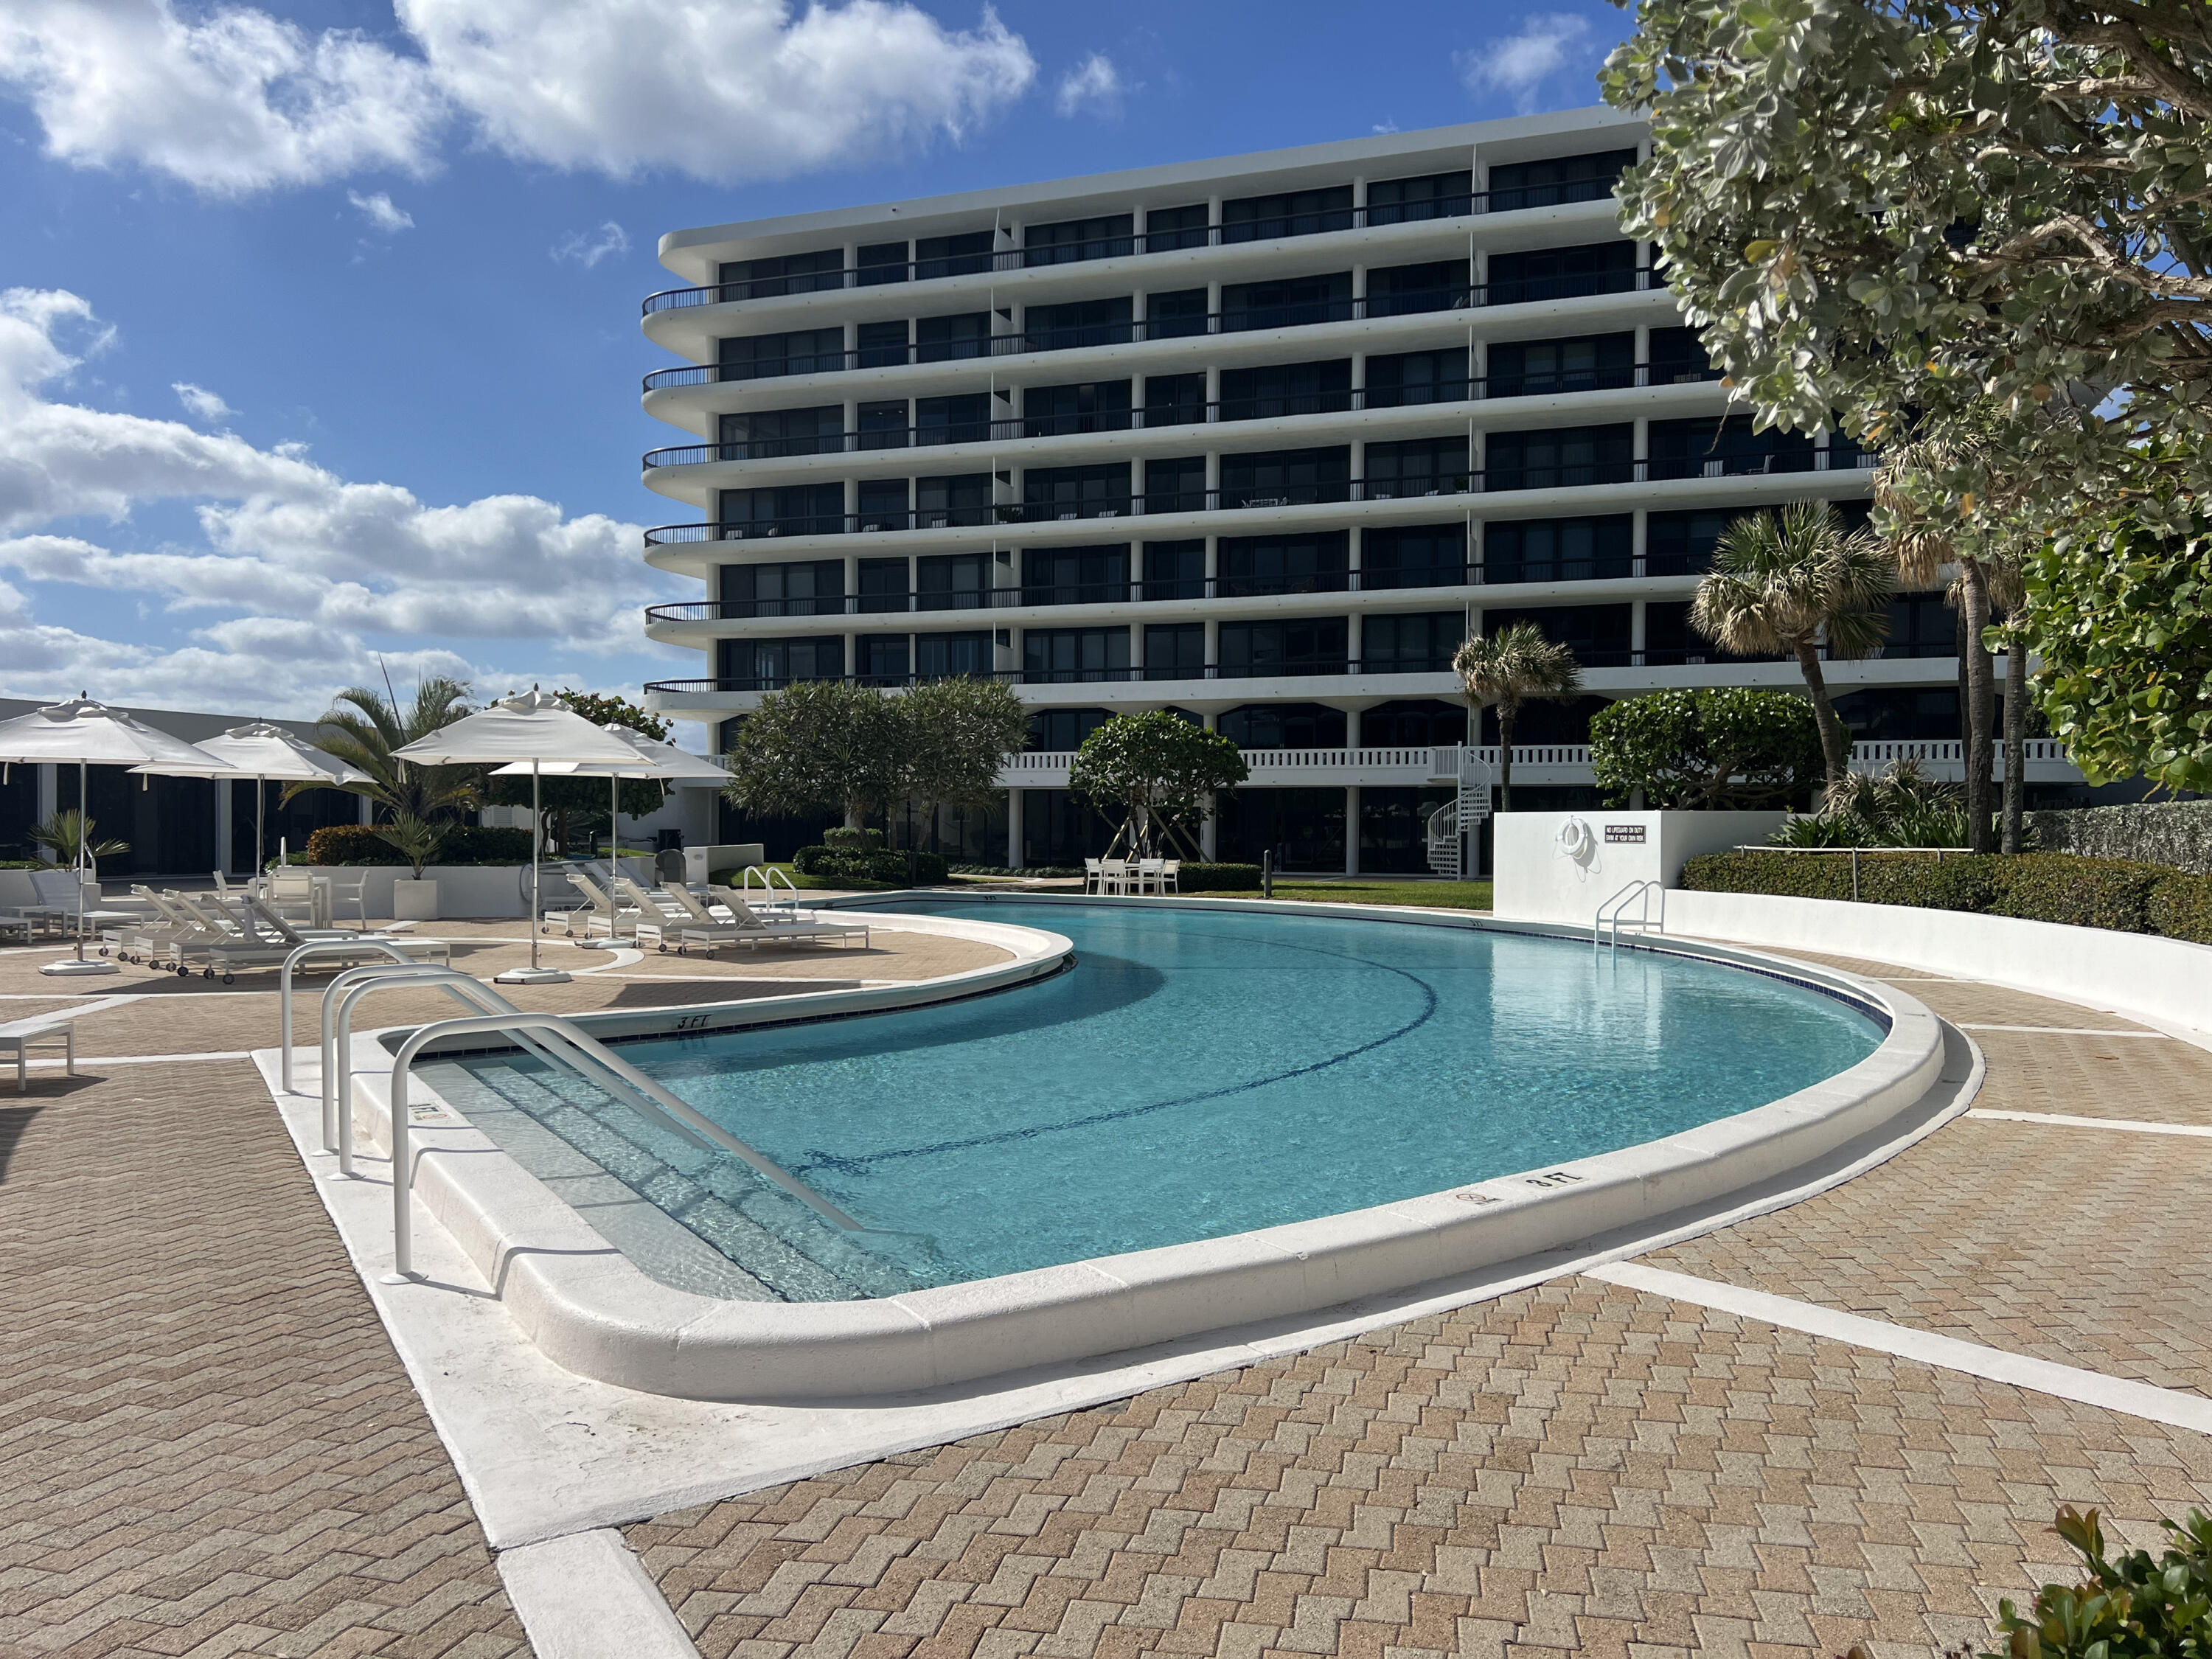 Property for Sale at 2660 S Ocean Boulevard C 5 W, Palm Beach, Palm Beach County, Florida - Bathrooms: 1  - $300,000